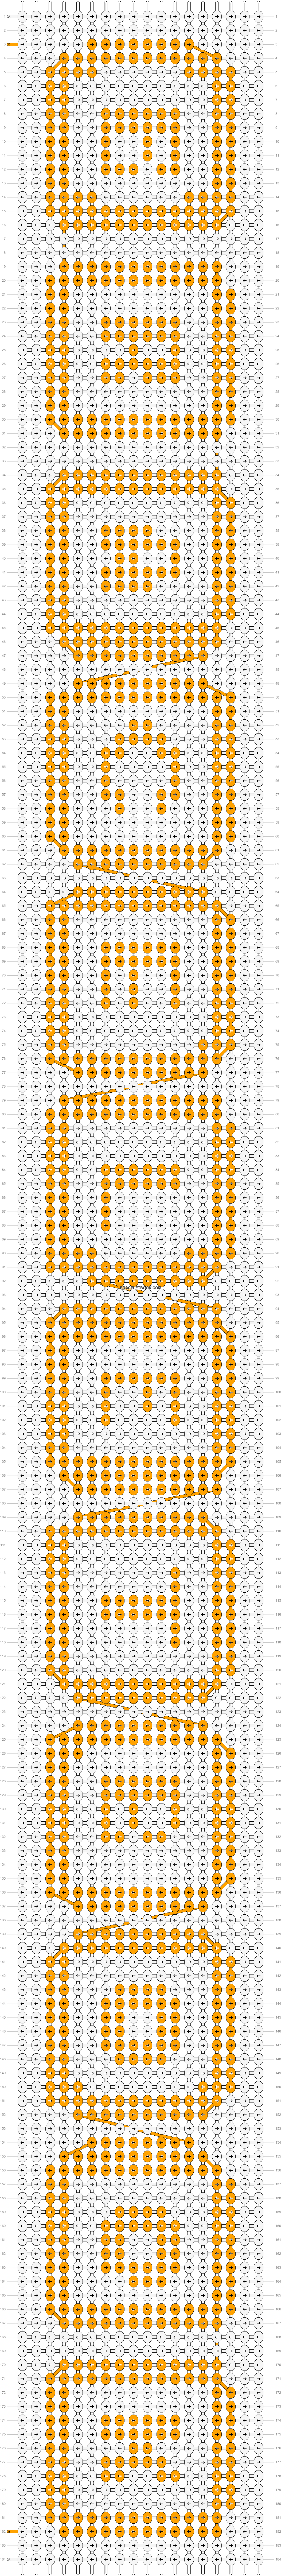 Alpha pattern #25149 pattern